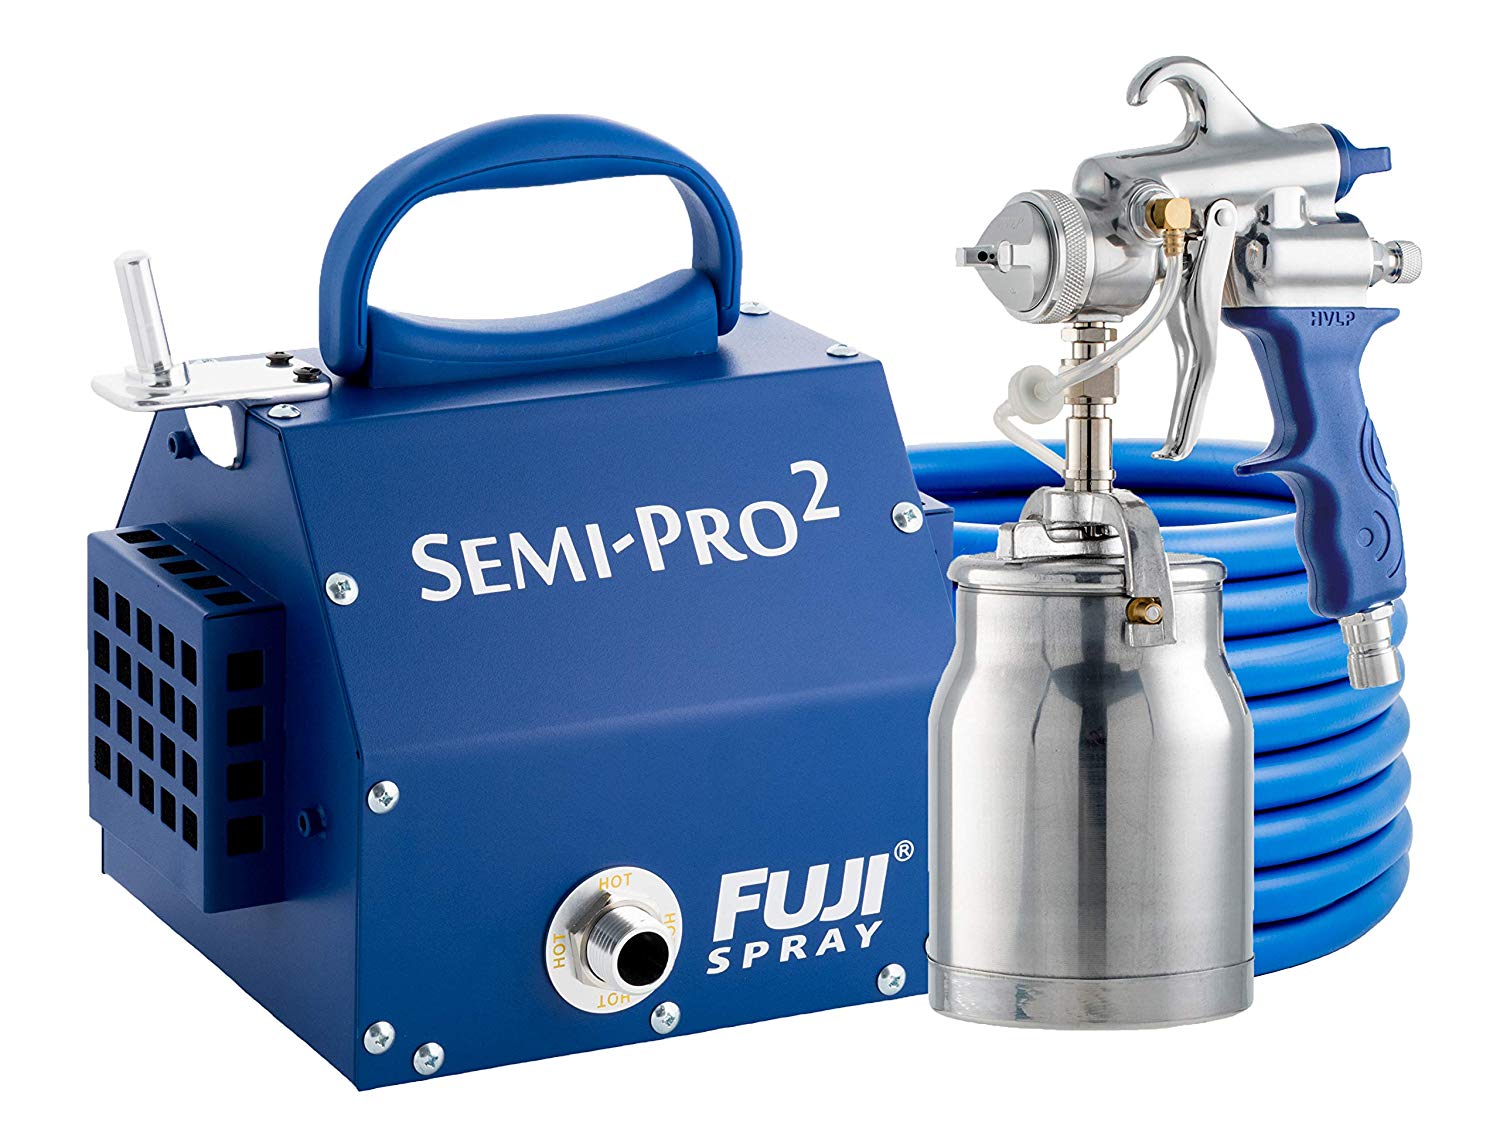 Fuji Semi-PRO 2 HVLP Spray System